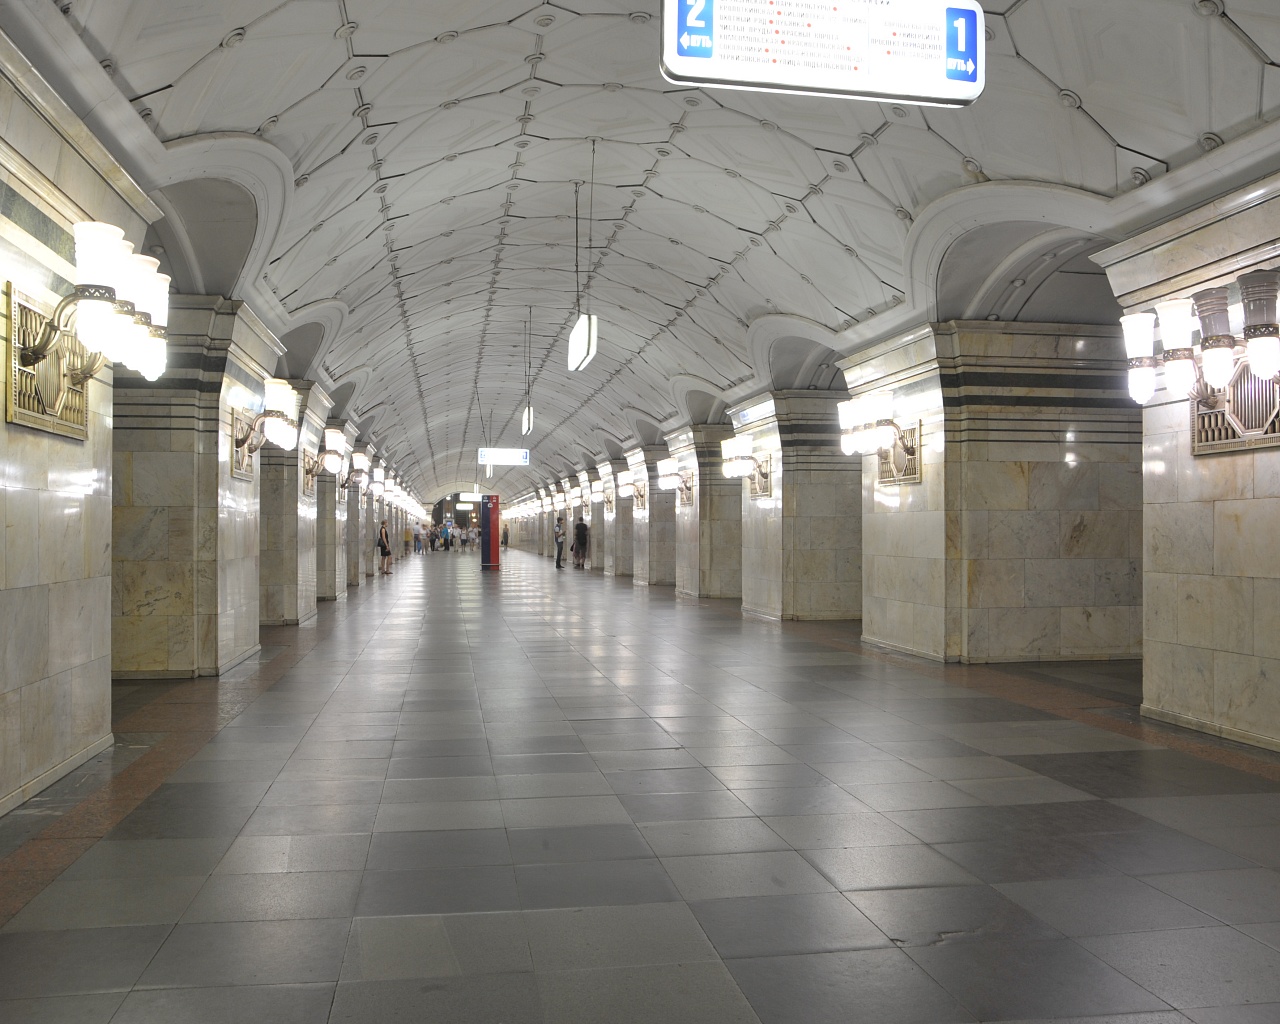 Вестибюль станции метро "Спортивная" отремонтировали за два месяца